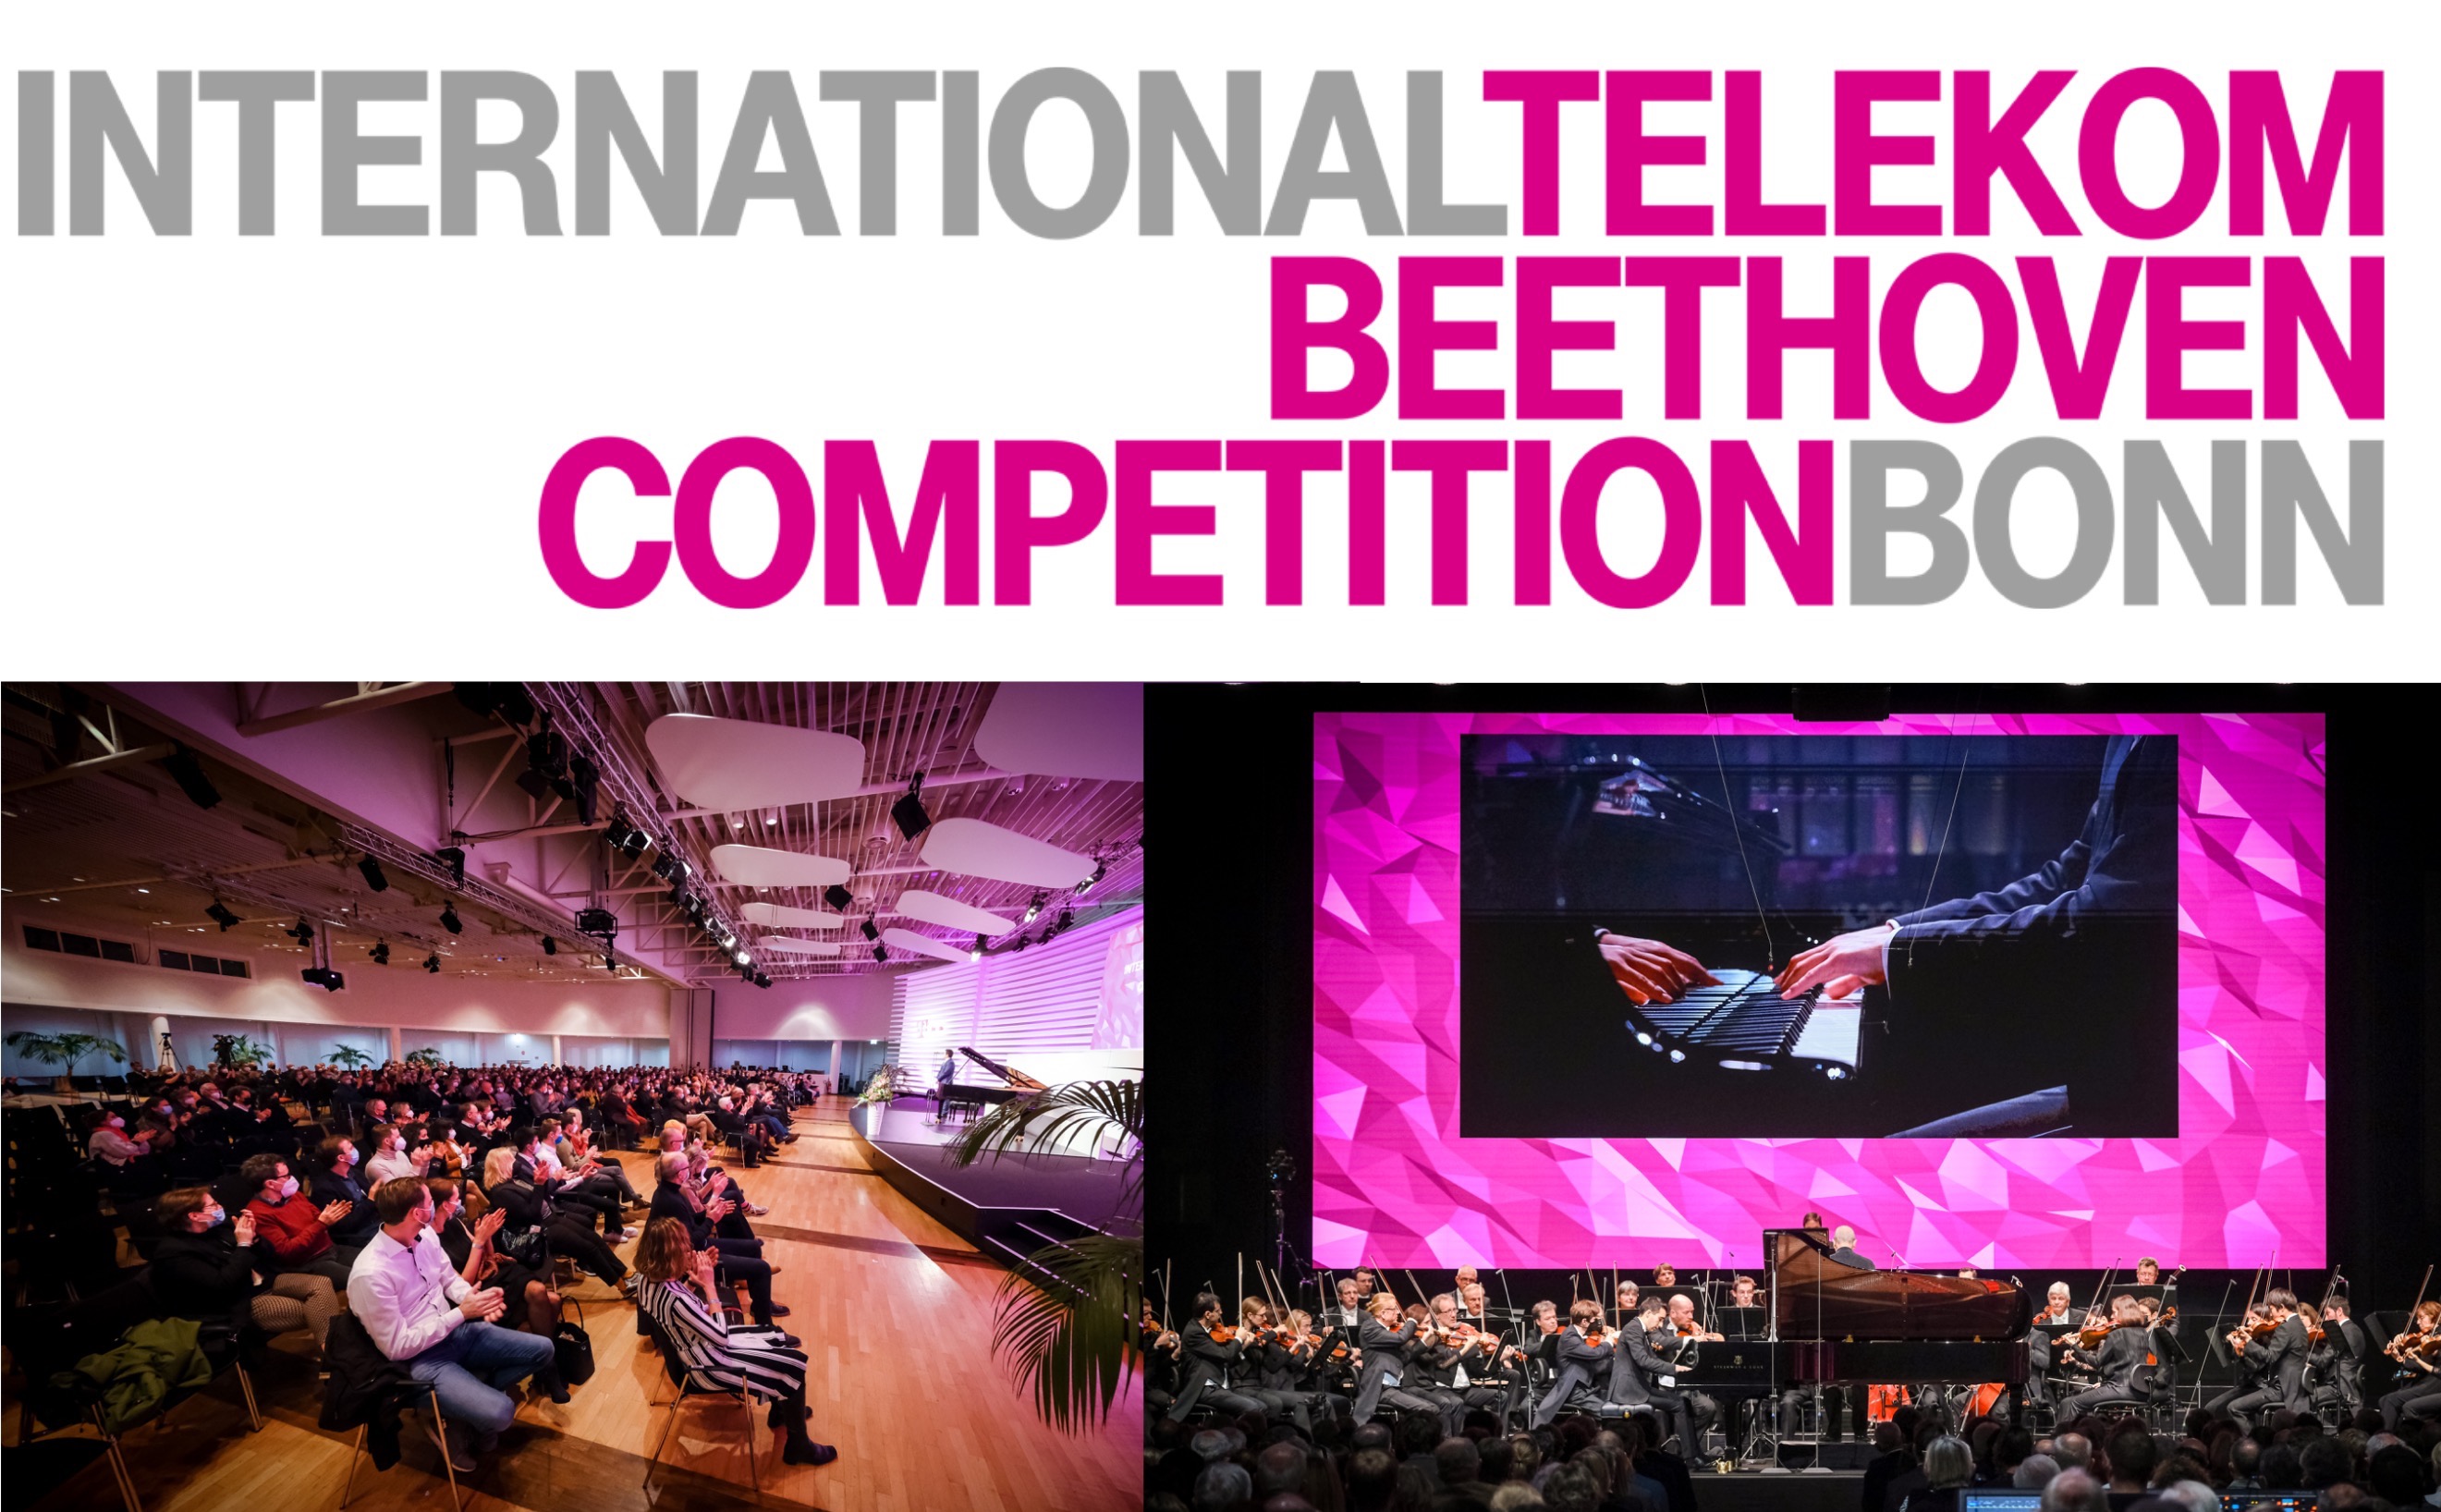 10. International Telekom Beethoven Competition Bonn